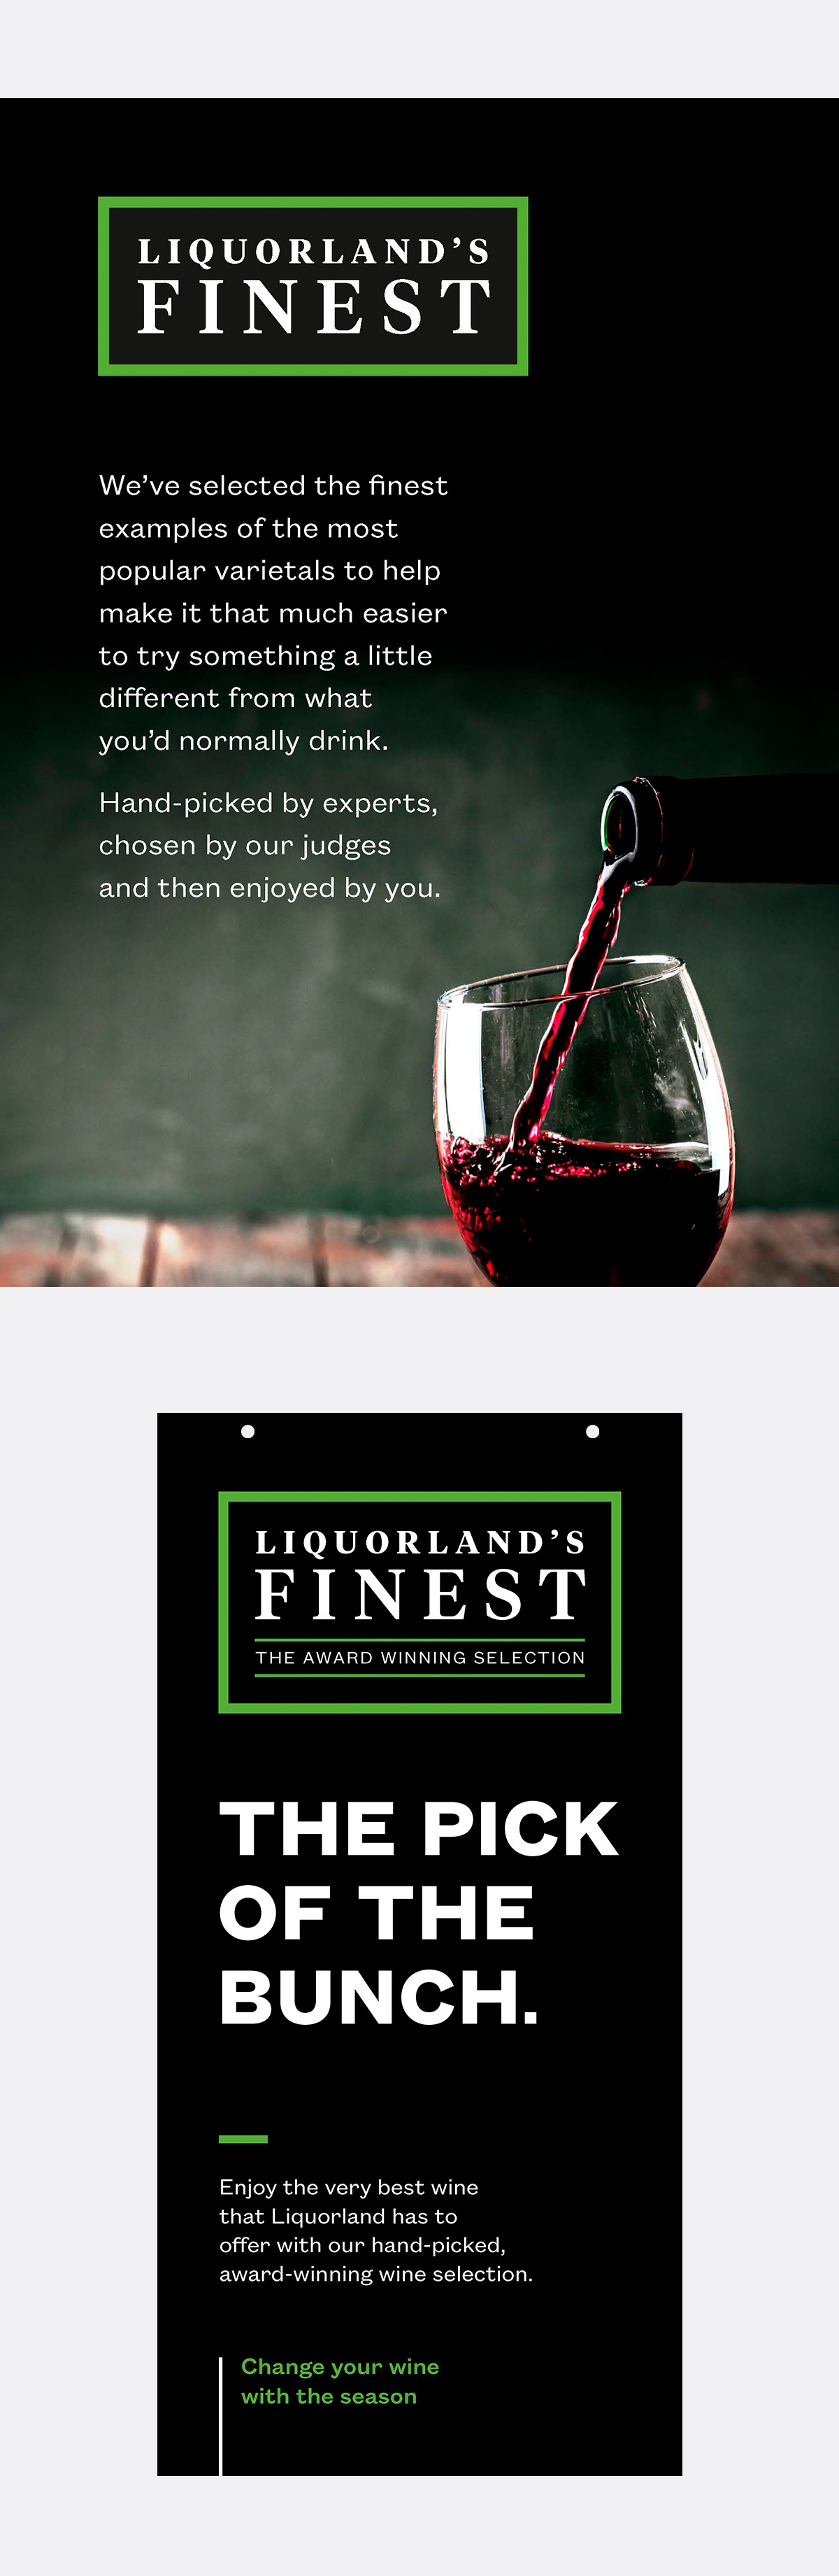 Liquorland's Finest